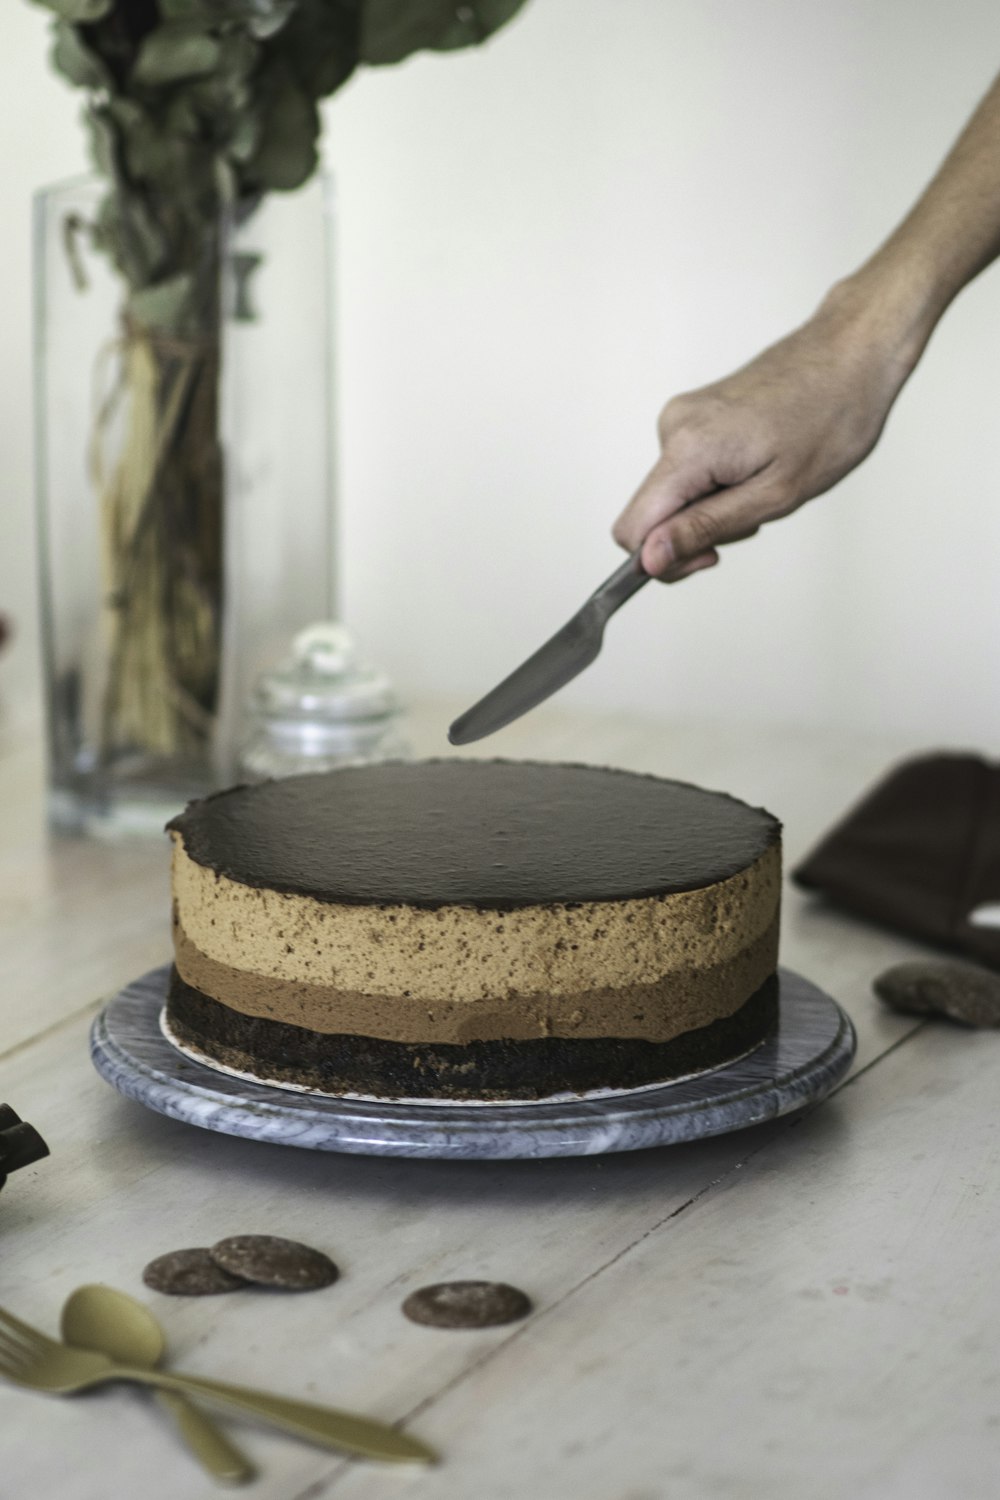 person slicing chocolate cake on black ceramic plate